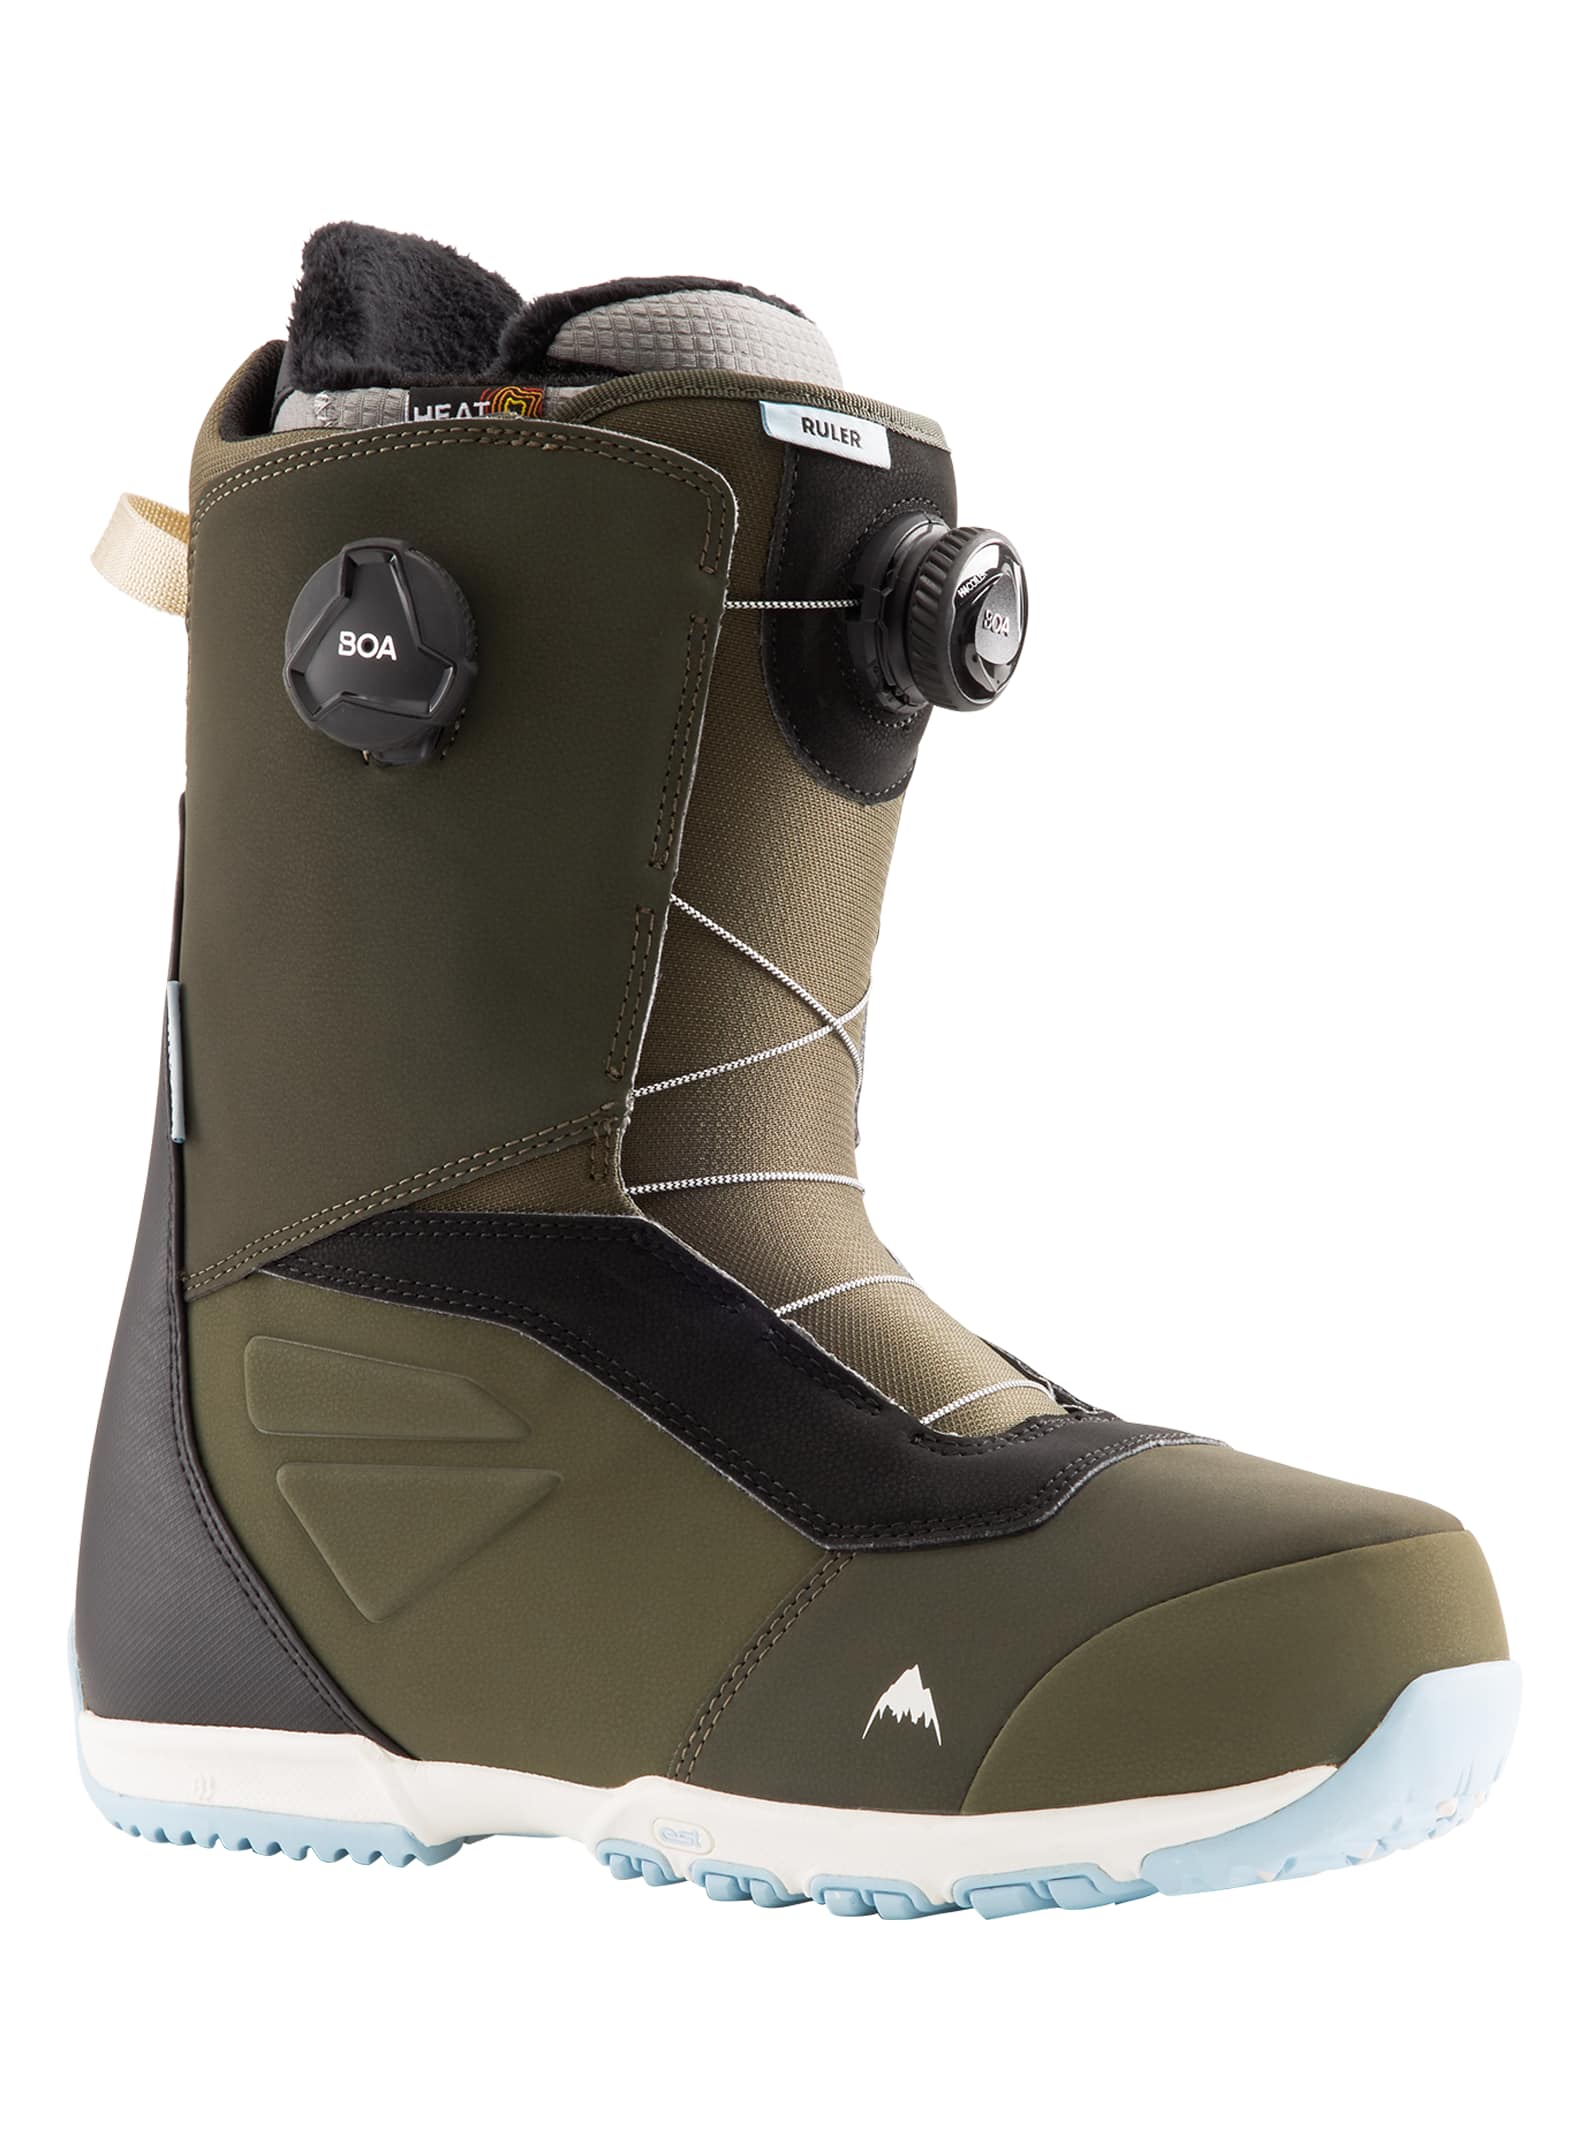 Men's Burton Ruler BOA® Snowboard Boots - Wide